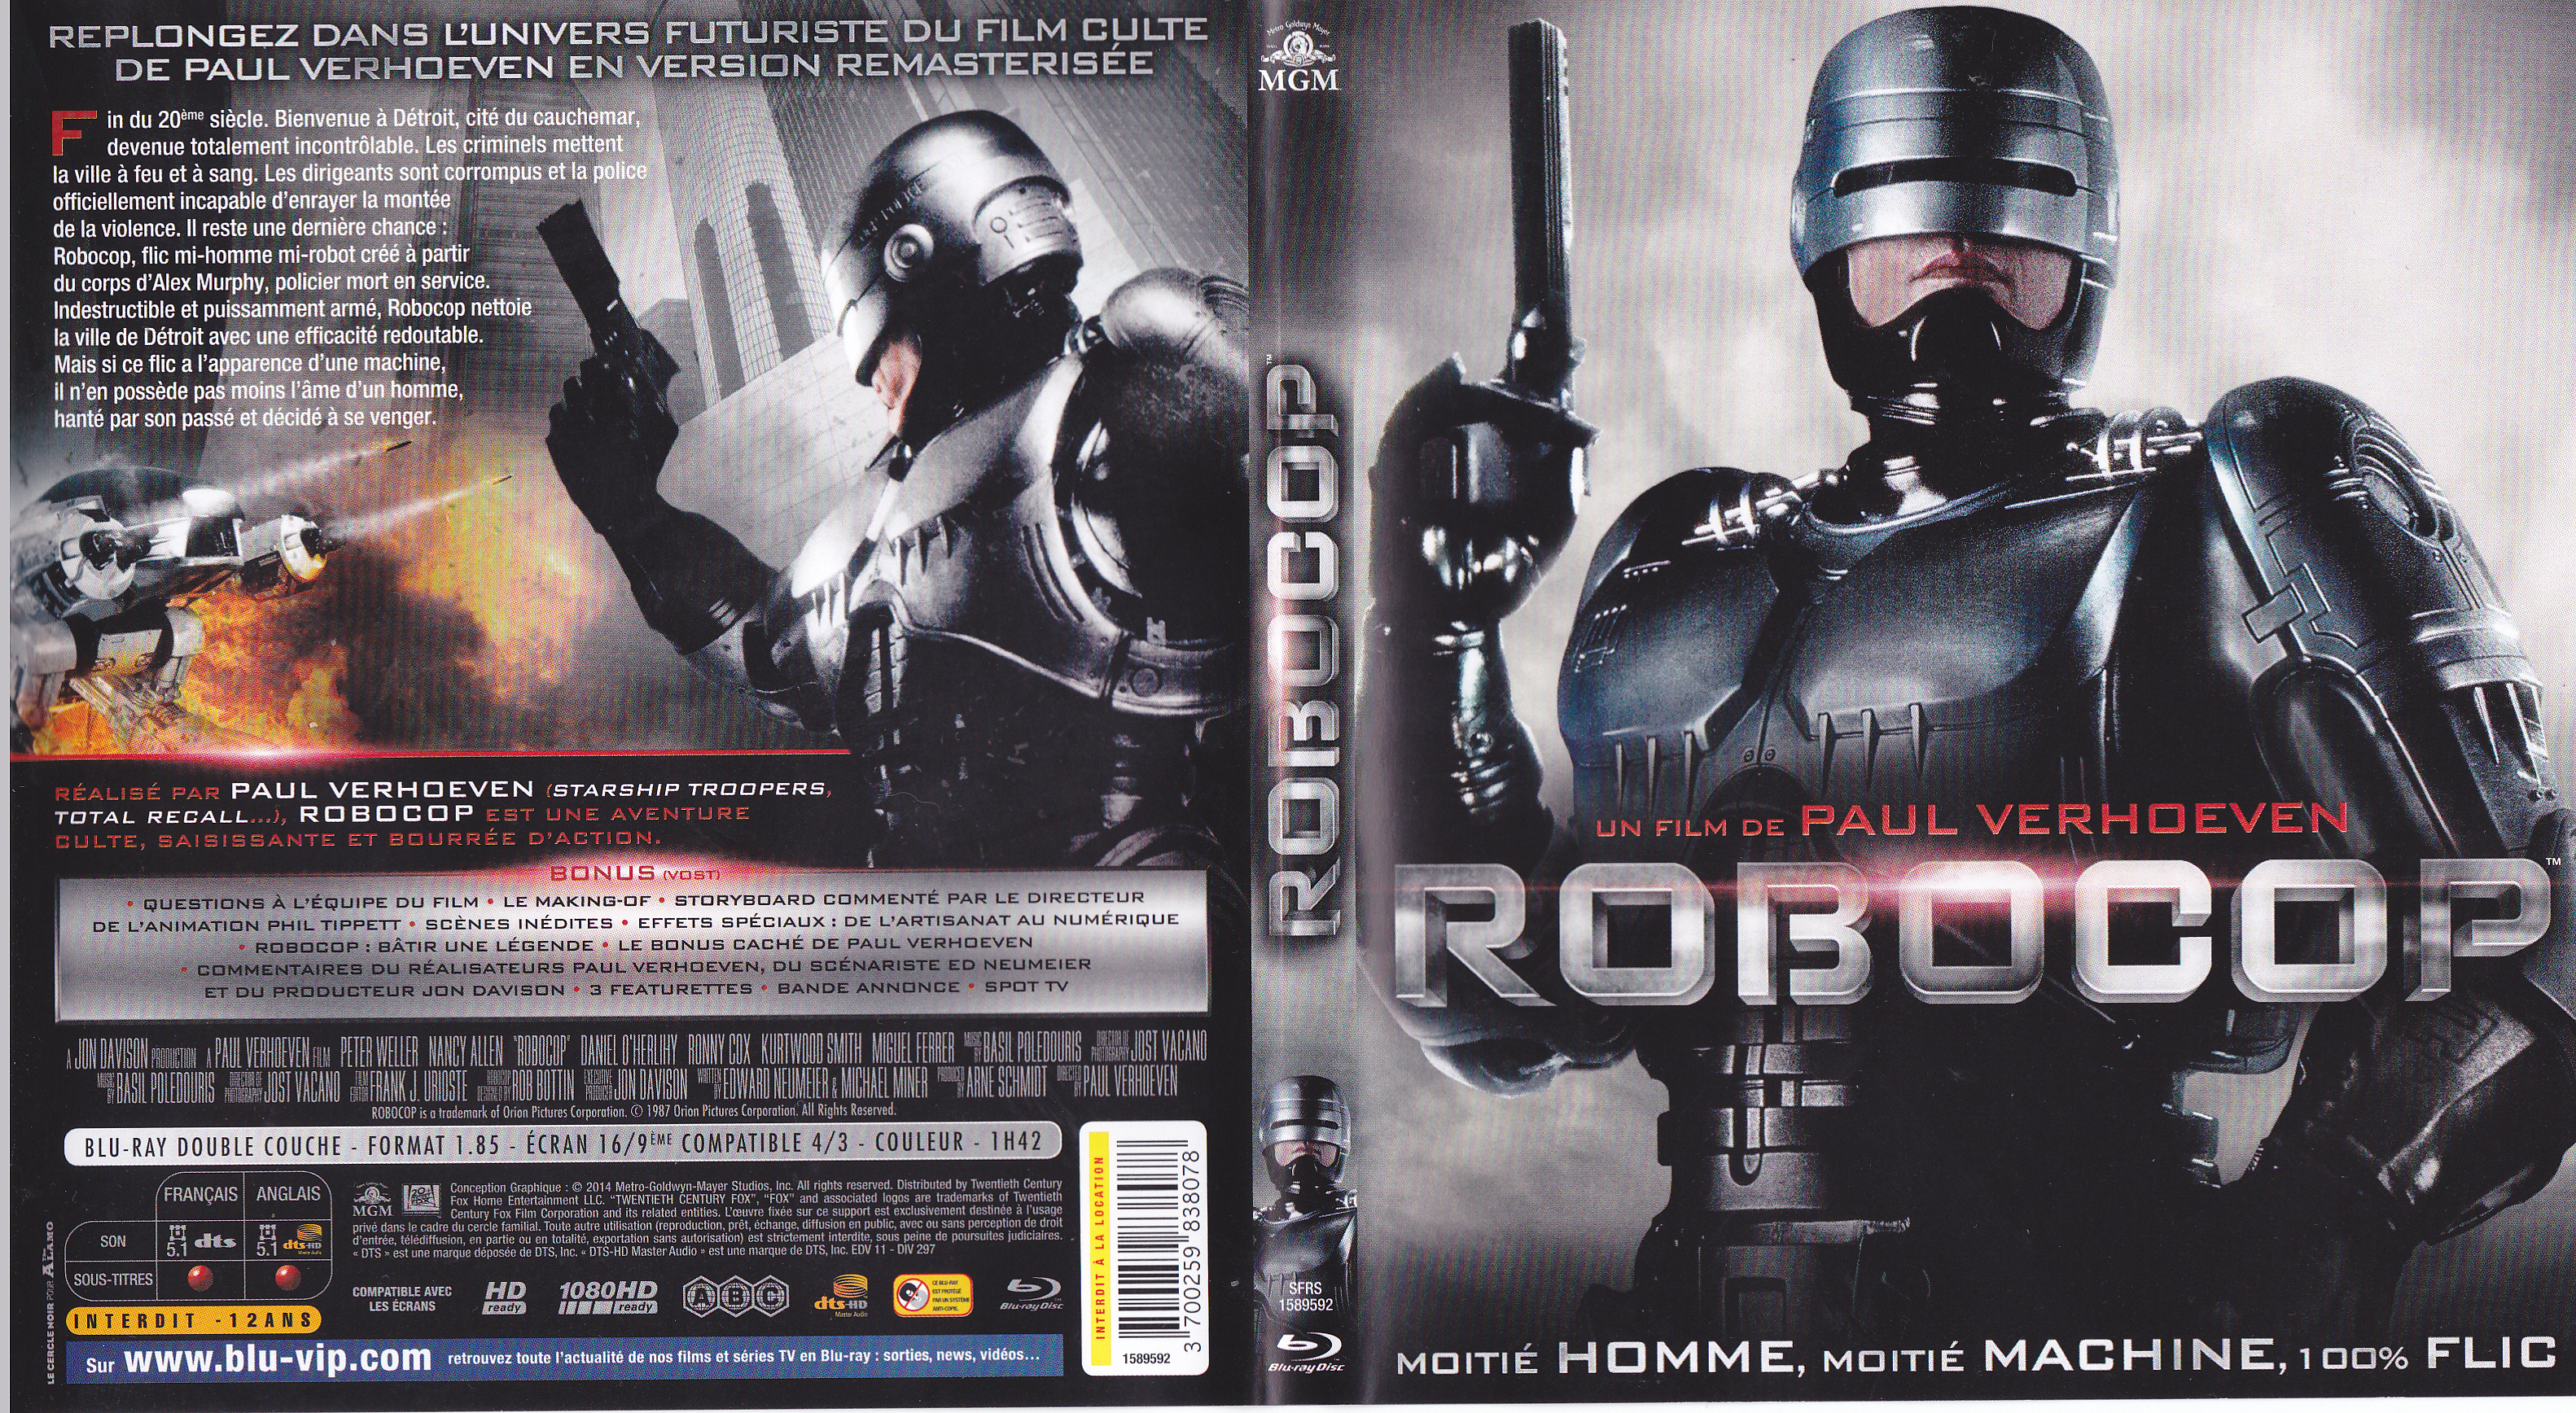 Jaquette DVD Robocop (BLU-RAY) v4